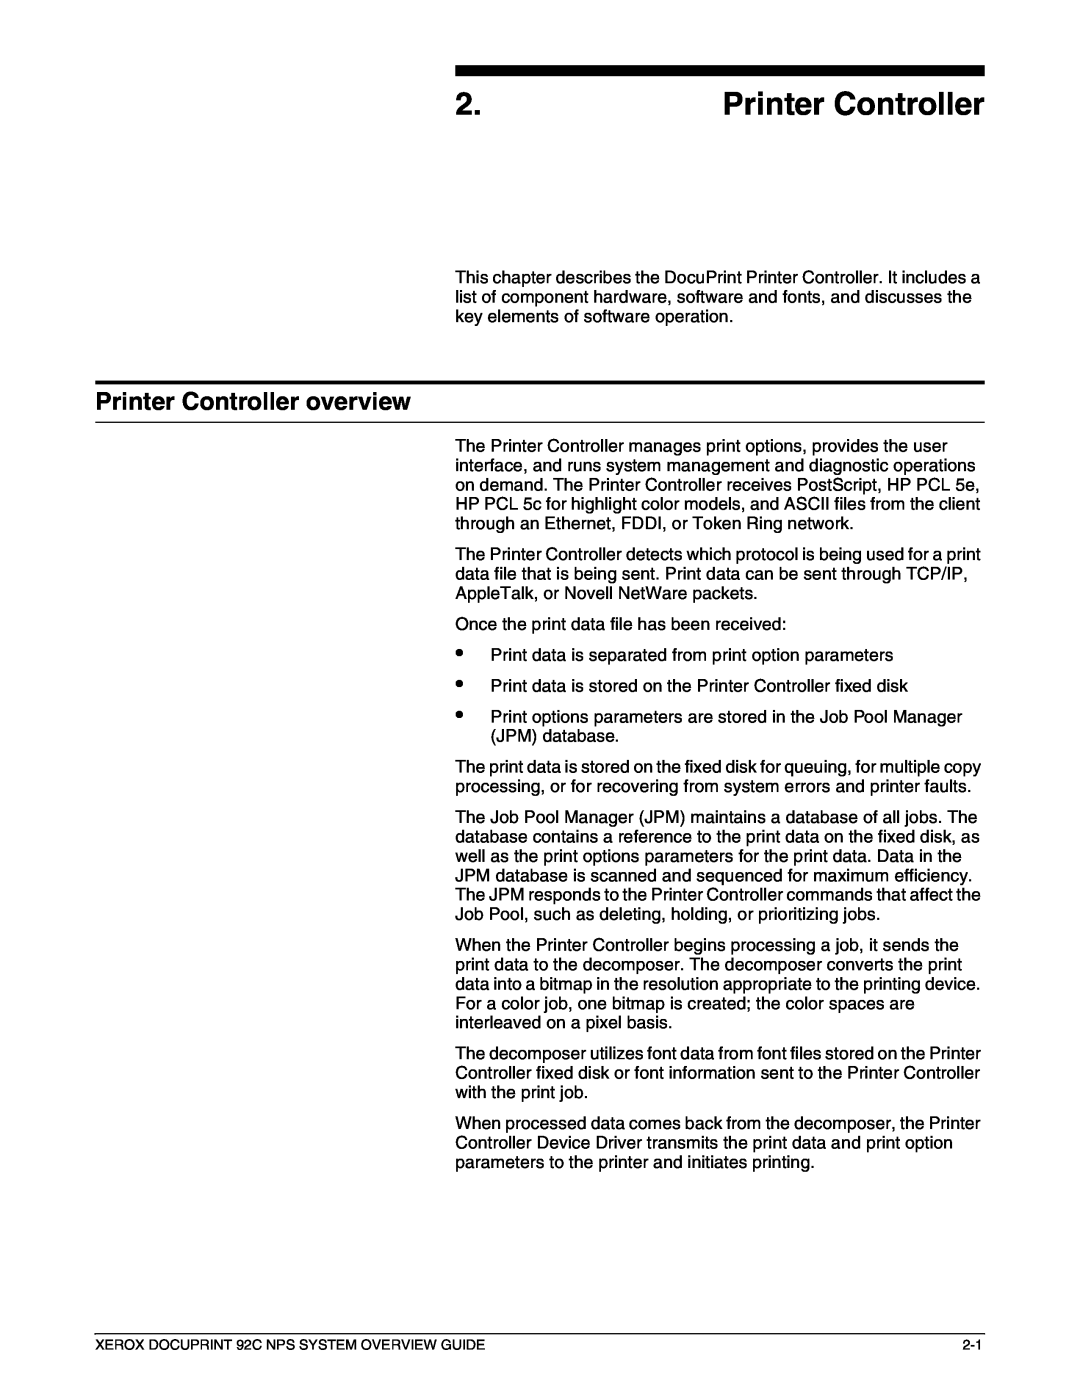 Xerox 92C NPS manual Printer Controller overview 